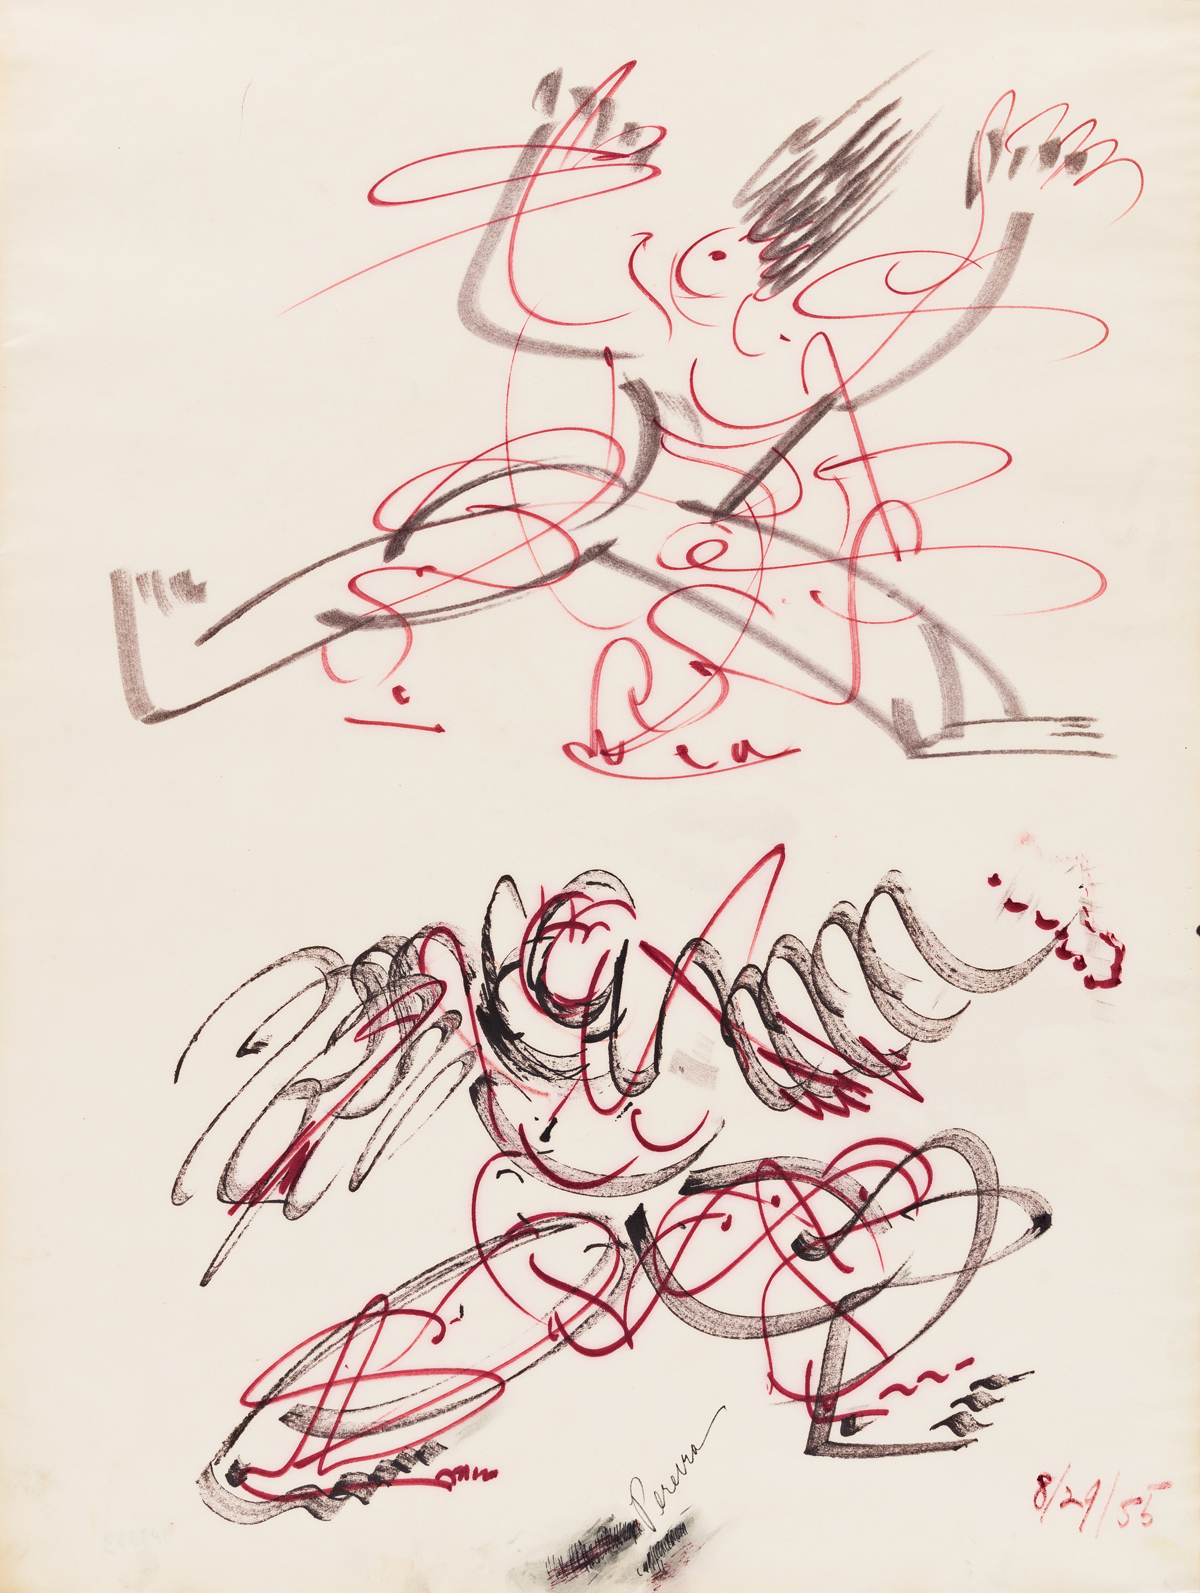 IRENE RICE PEREIRA (1902 - 1971, AMERICAN) Untitled, (Two Figures).